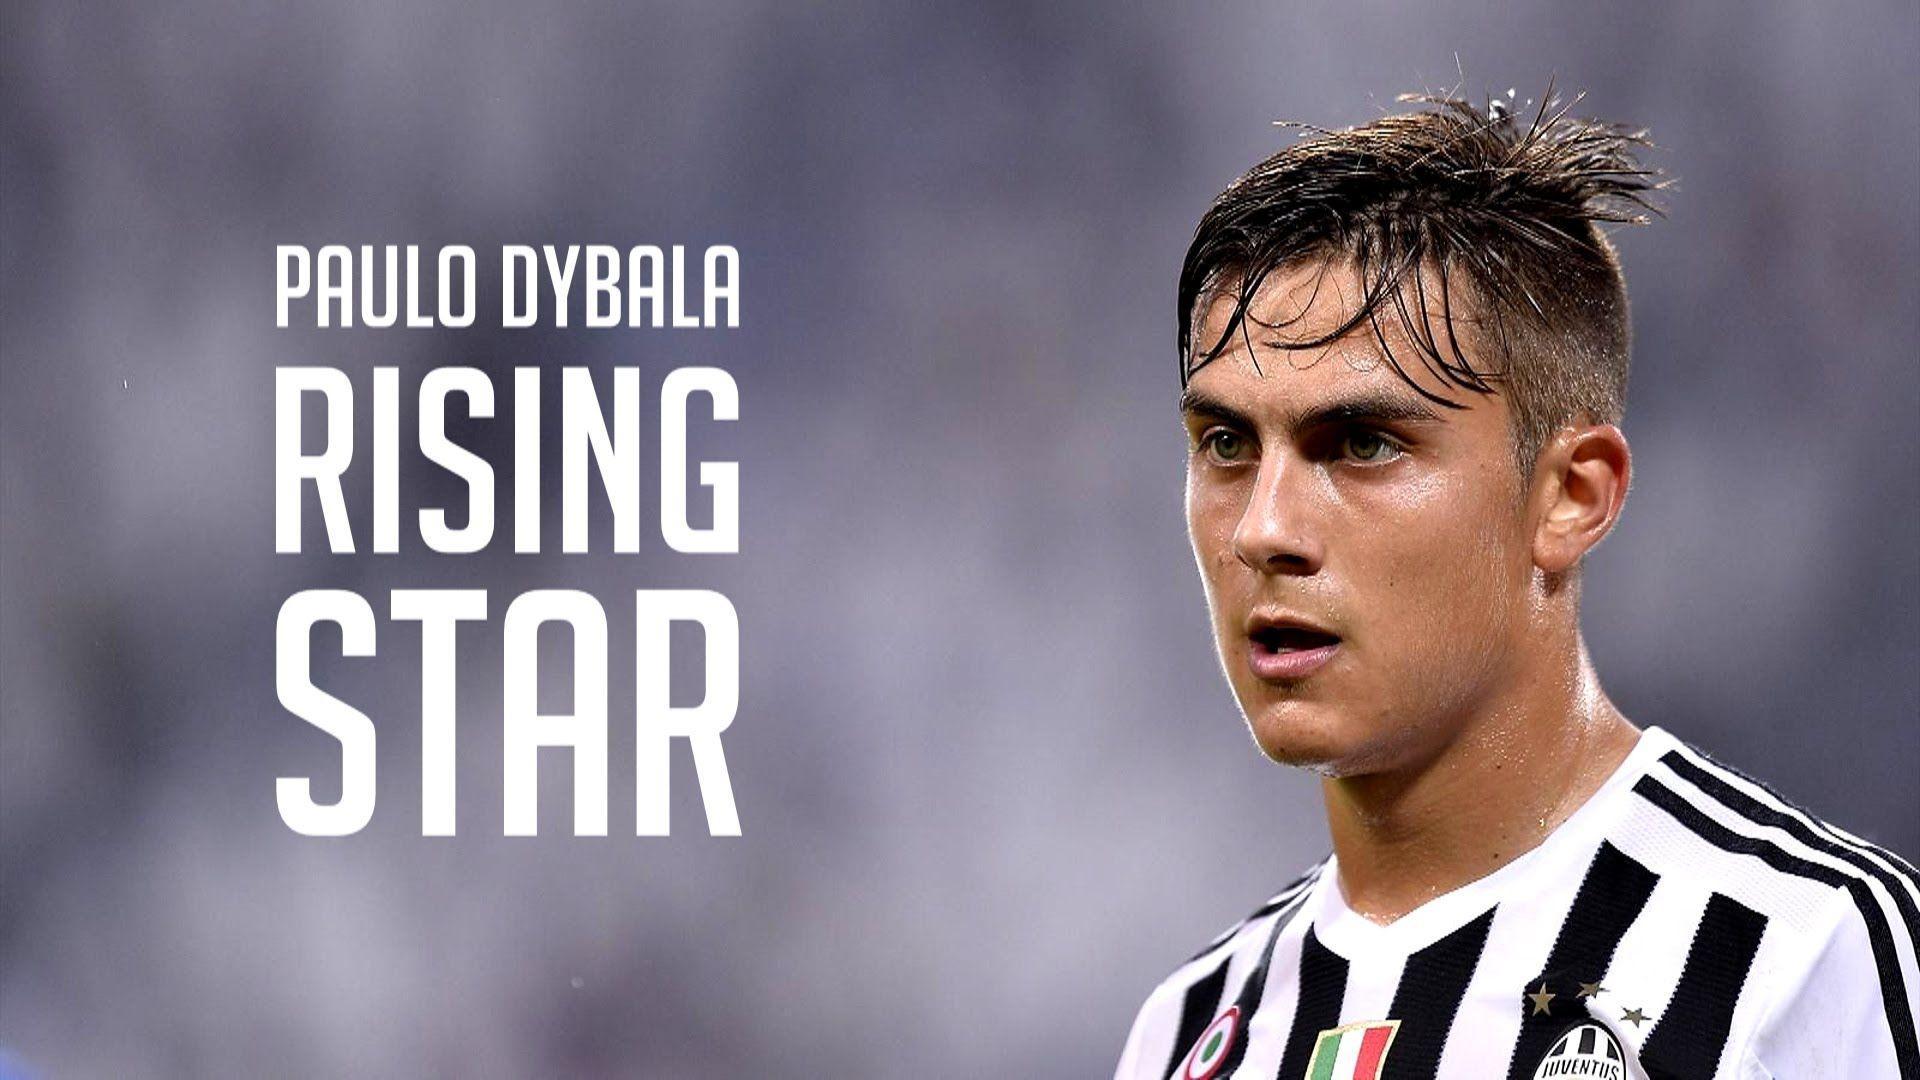 Paulo Dybala Rising Star Juventus Wallpaper Wallpaper Themes